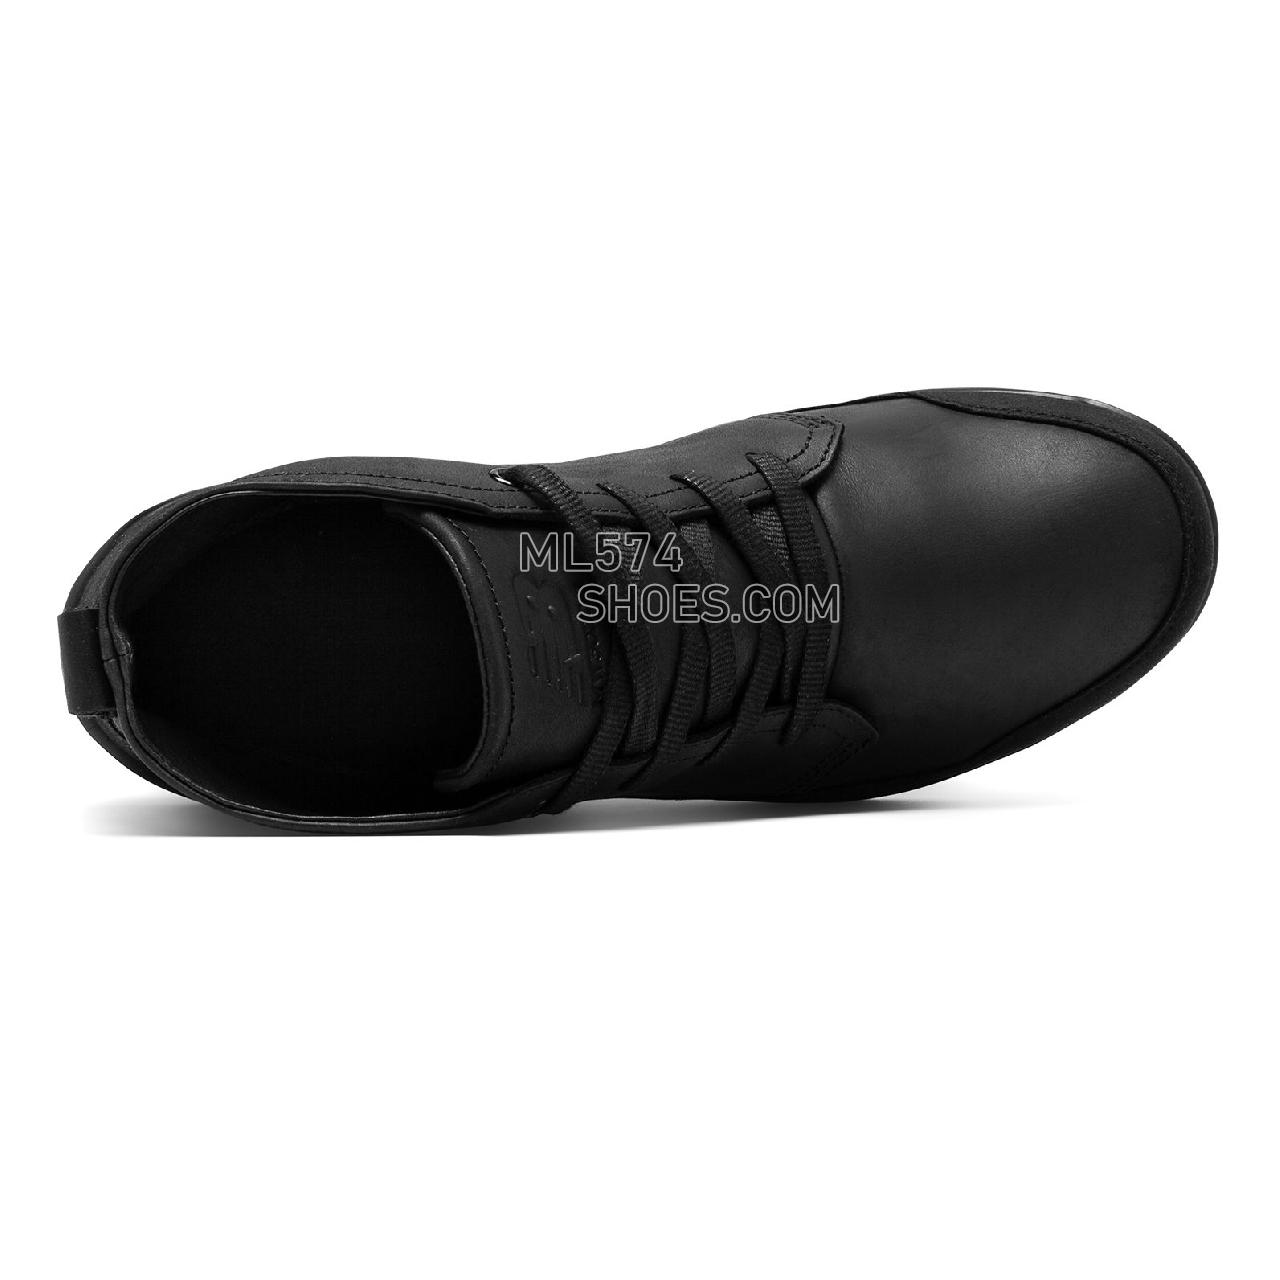 New Balance New Balance 3020 Boot - Men's 3020 - Walking Black - BM3020BK